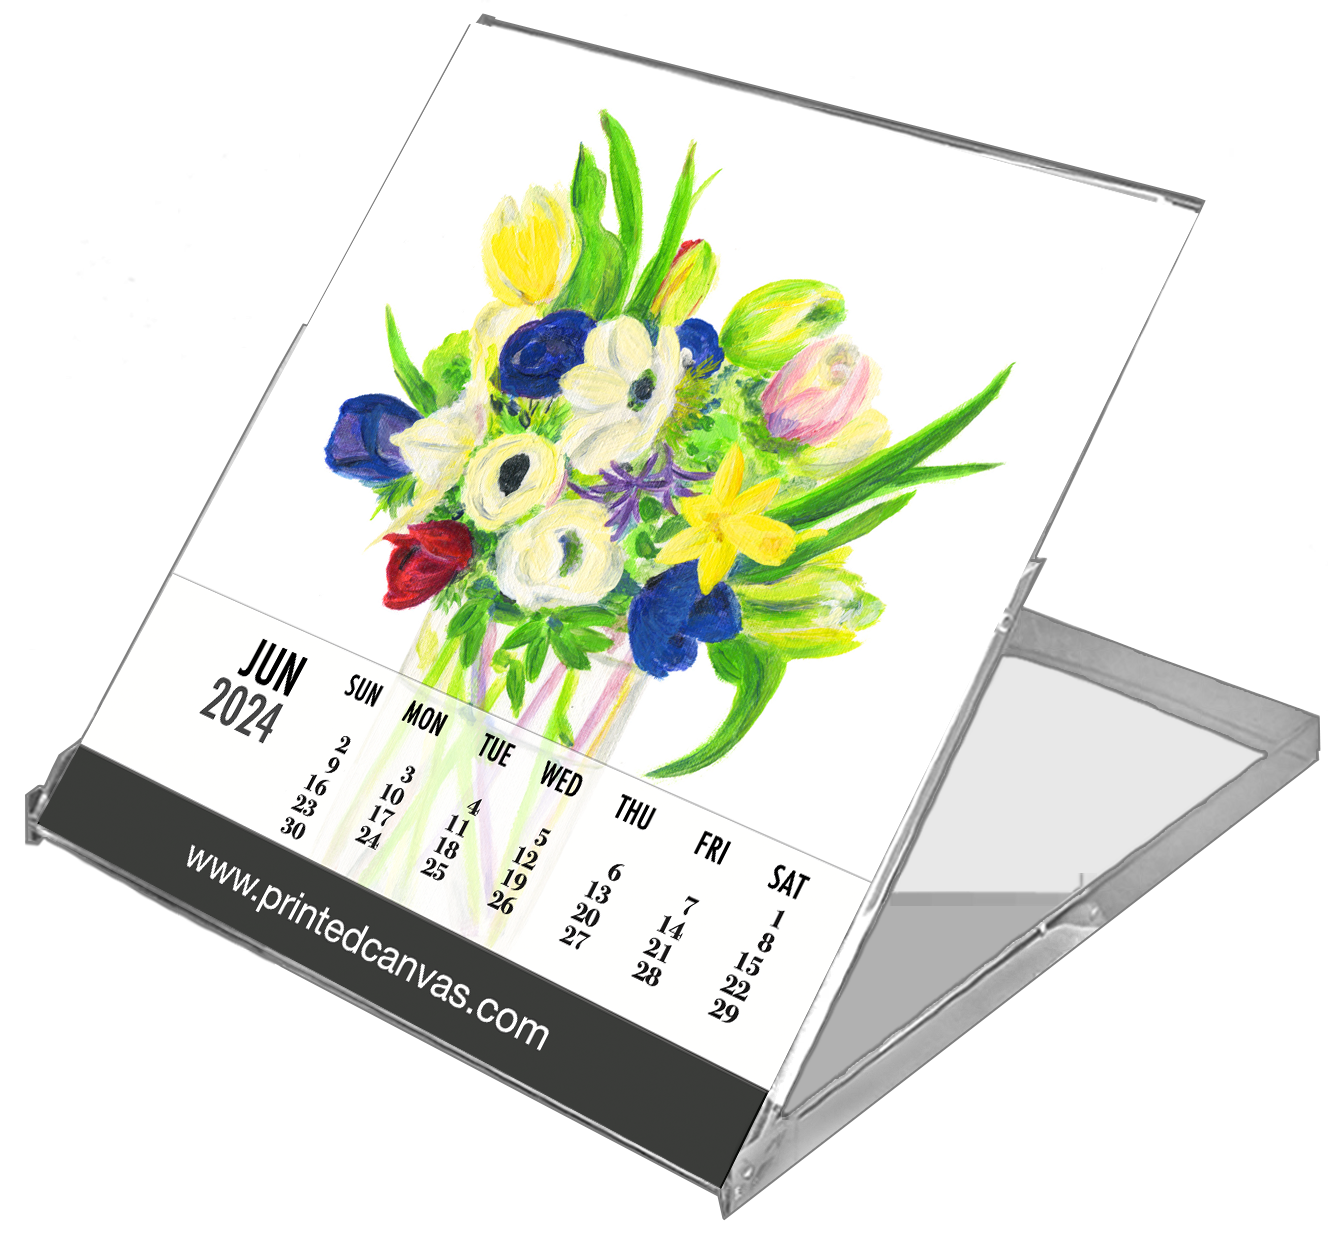 Desk Calendar, Botanicals (#201-2024)